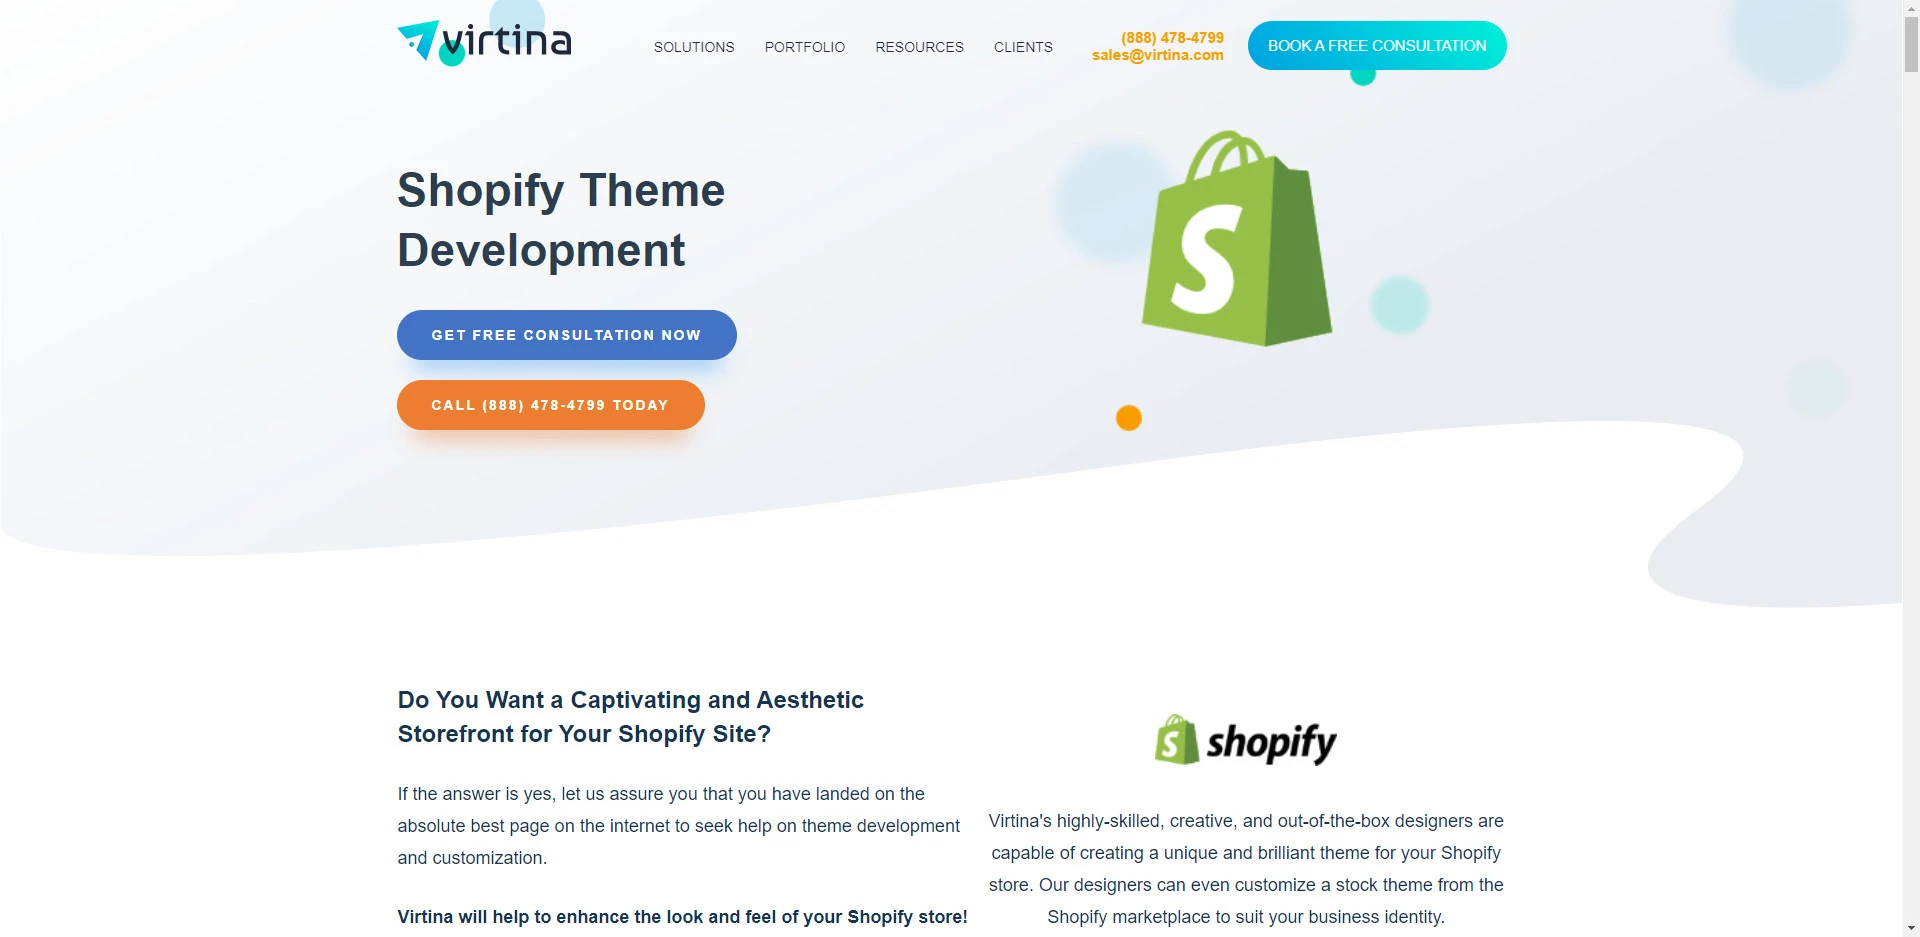 why-Virtina-for-Shopify-theme-development